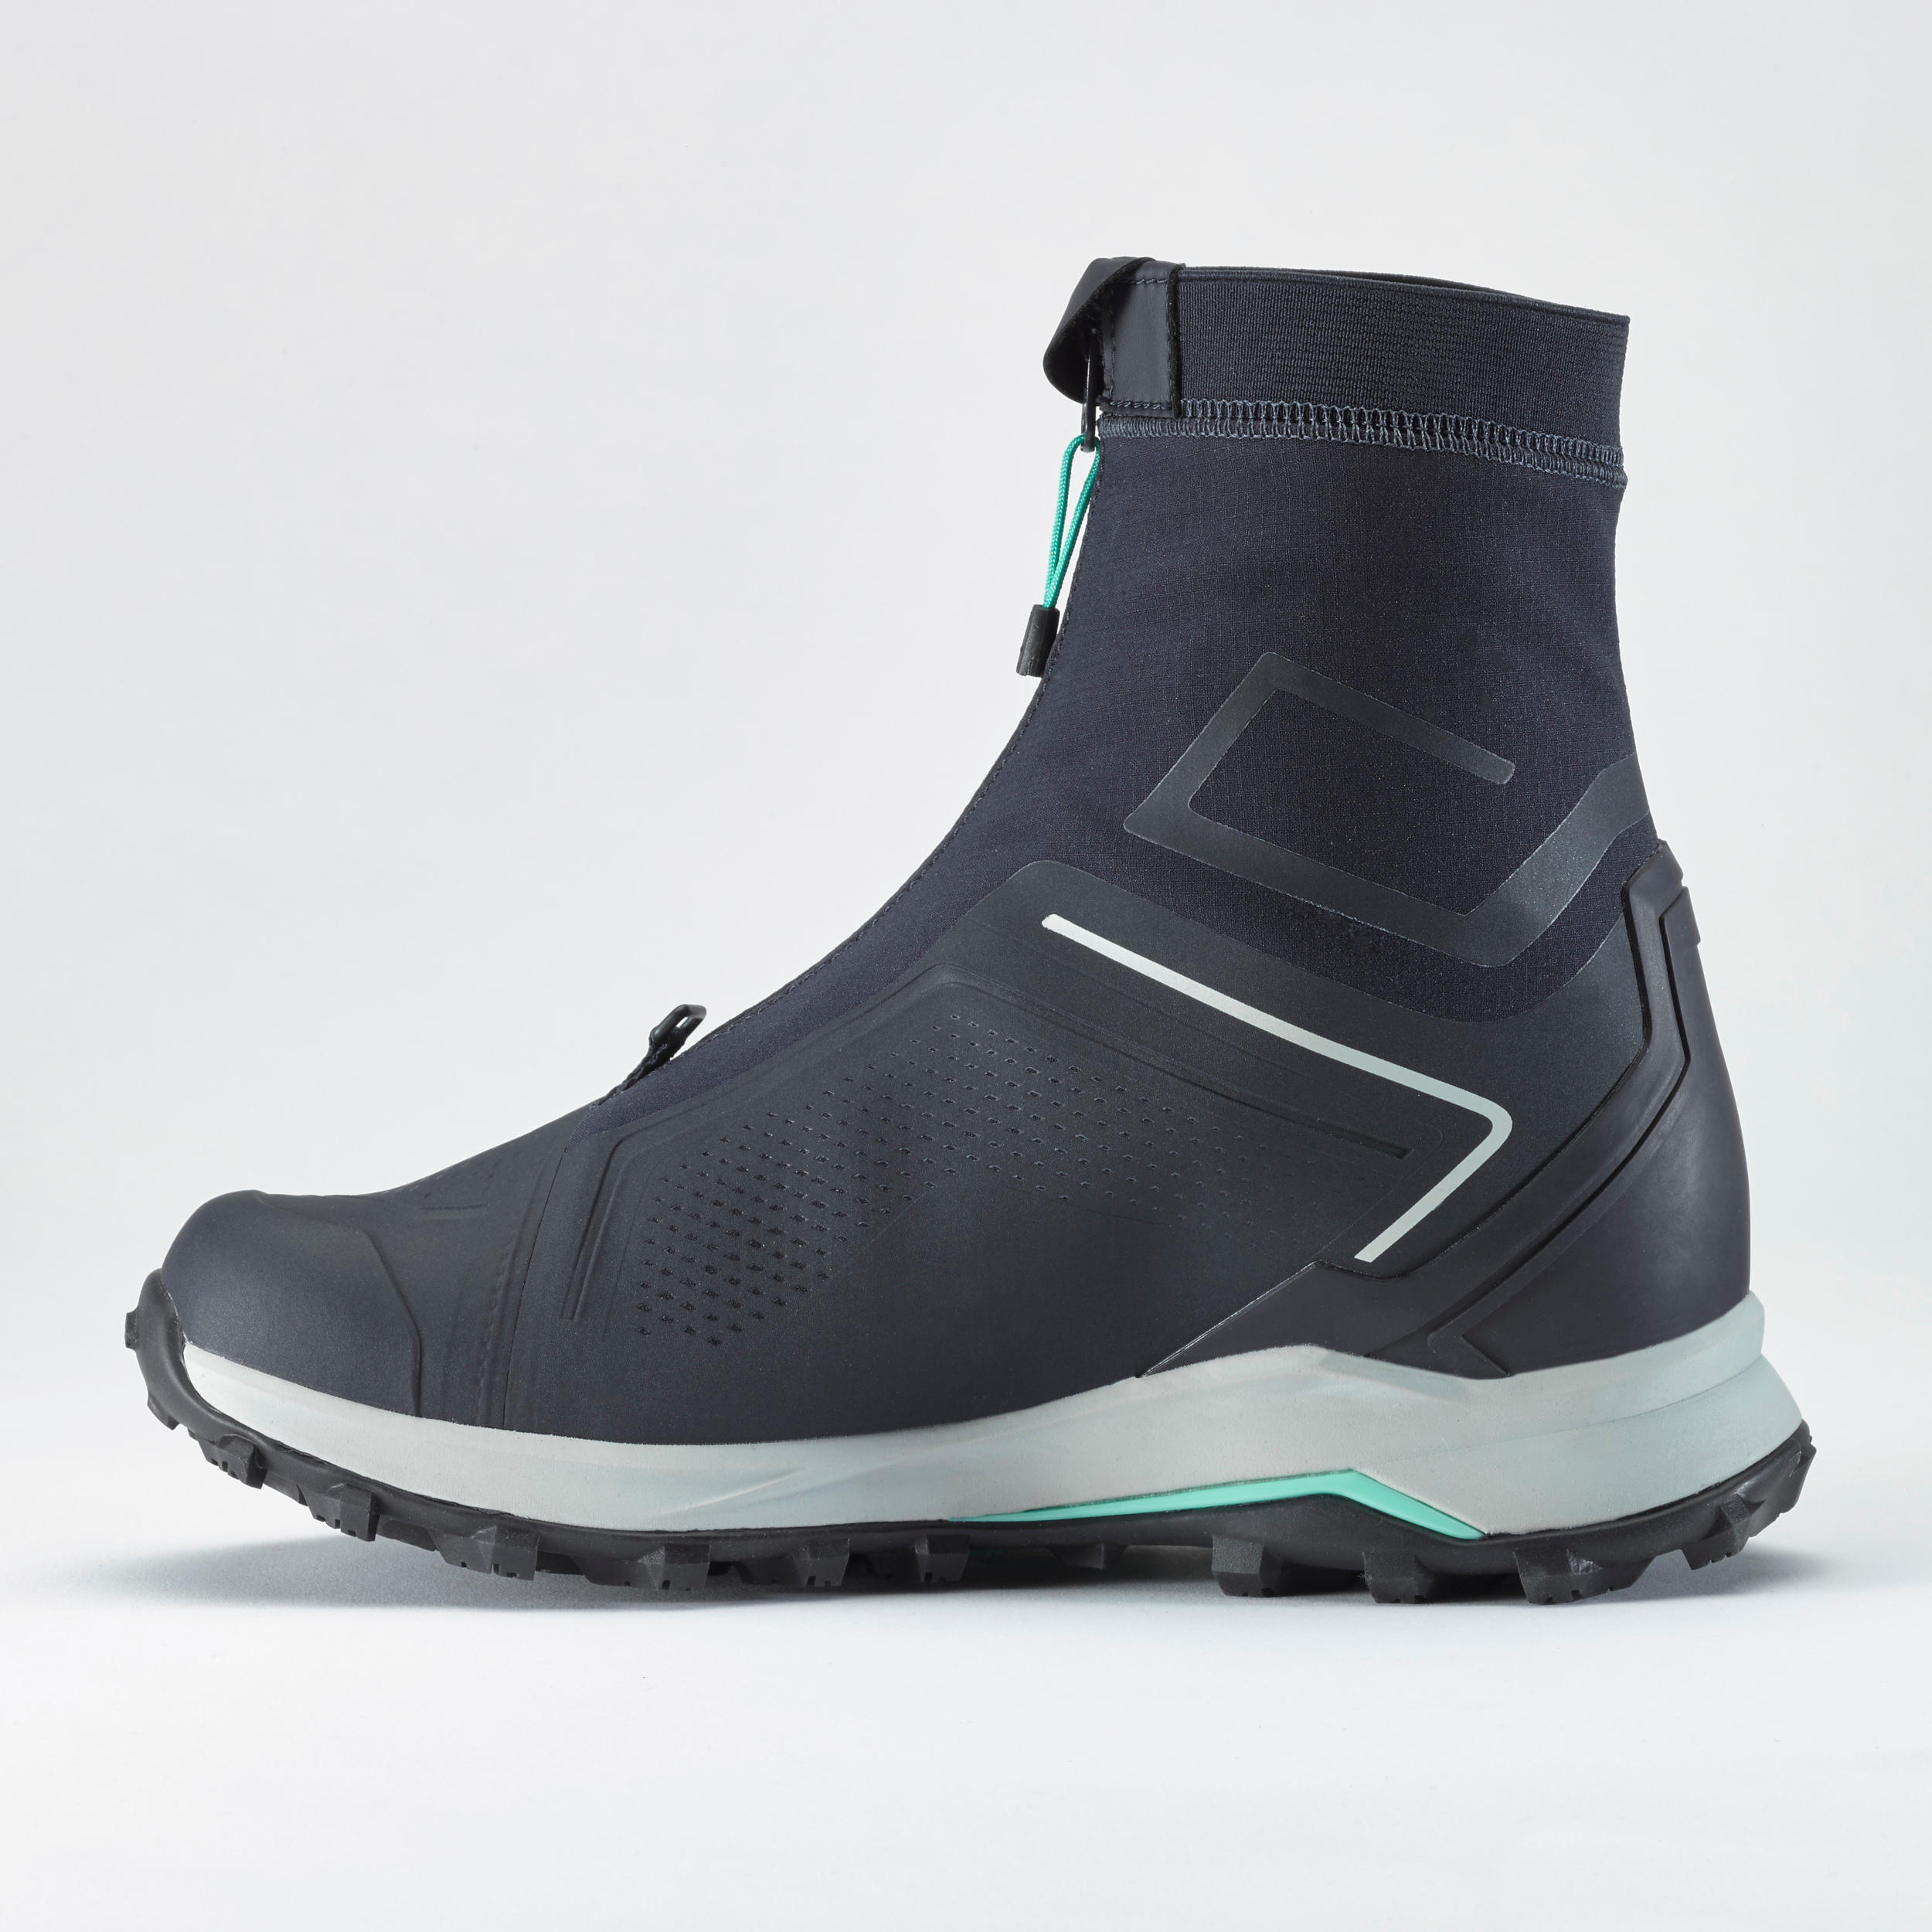 Women's warm and waterproof hiking boots - SH900 PRO MOUNTAIN   2/6